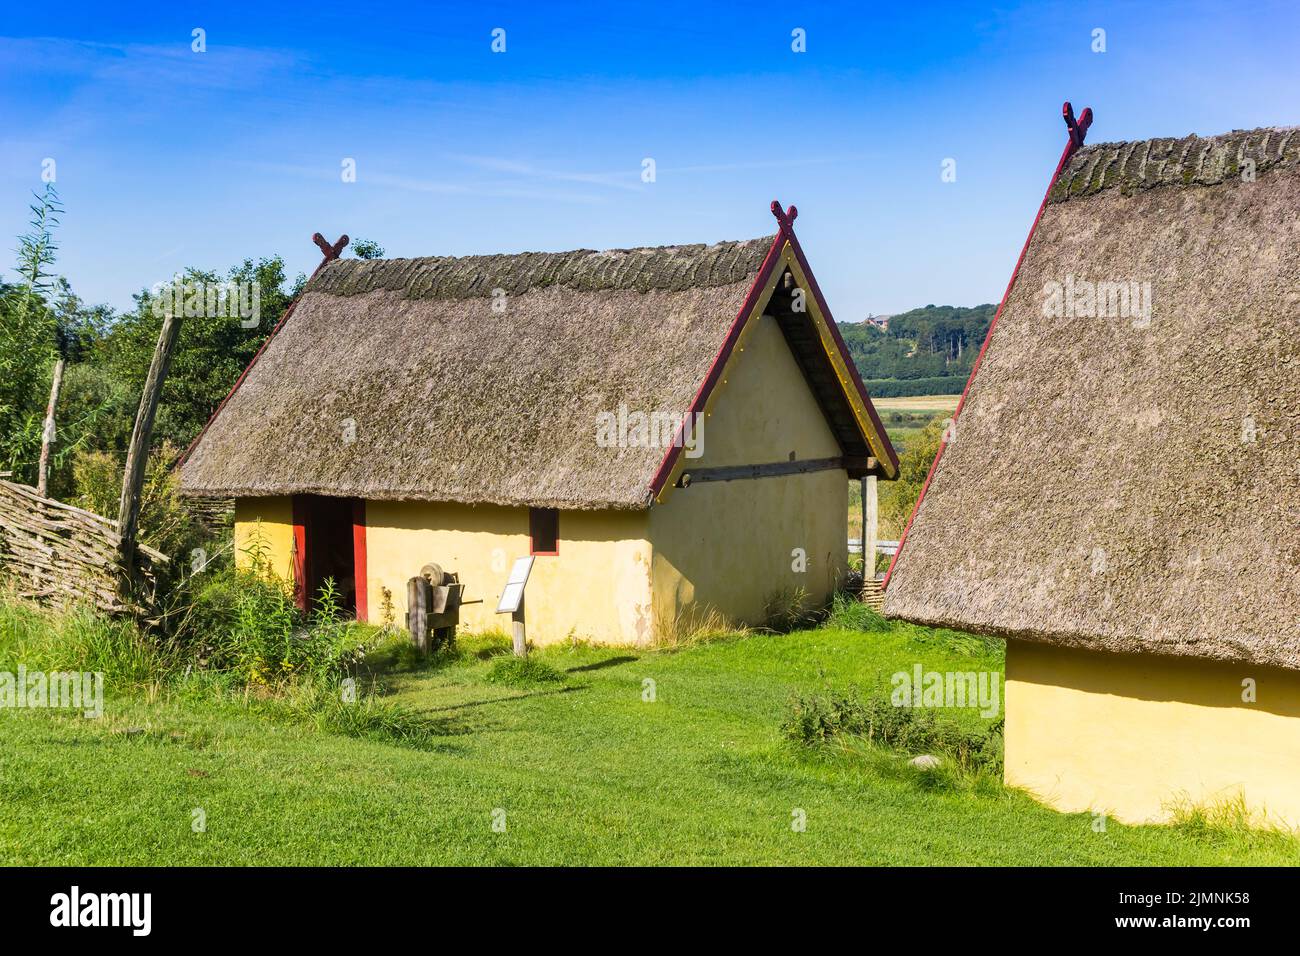 Little house in the recontructed Viking village of Fyrkat near Hobro, Denmark Stock Photo